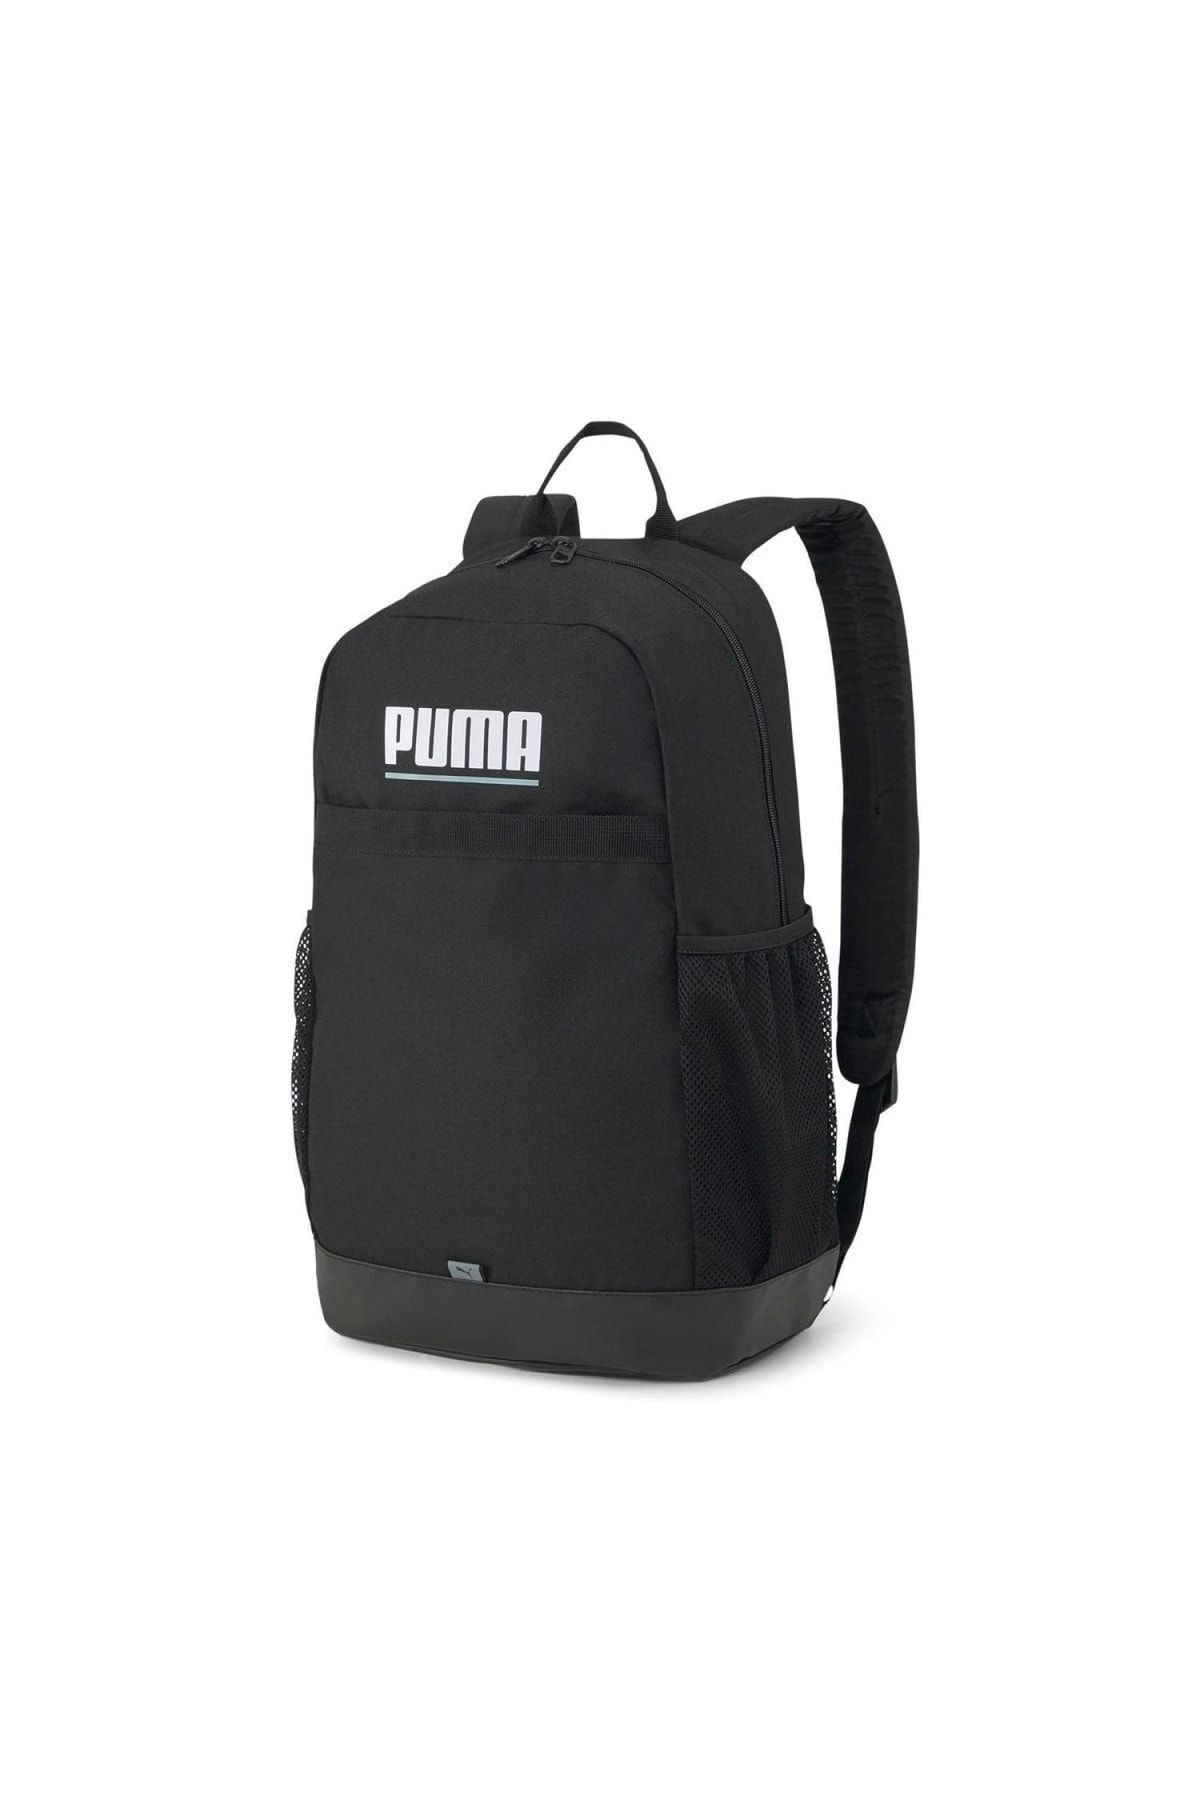 Puma 07961501 Plus Backpack Unisex Sırt Çantası